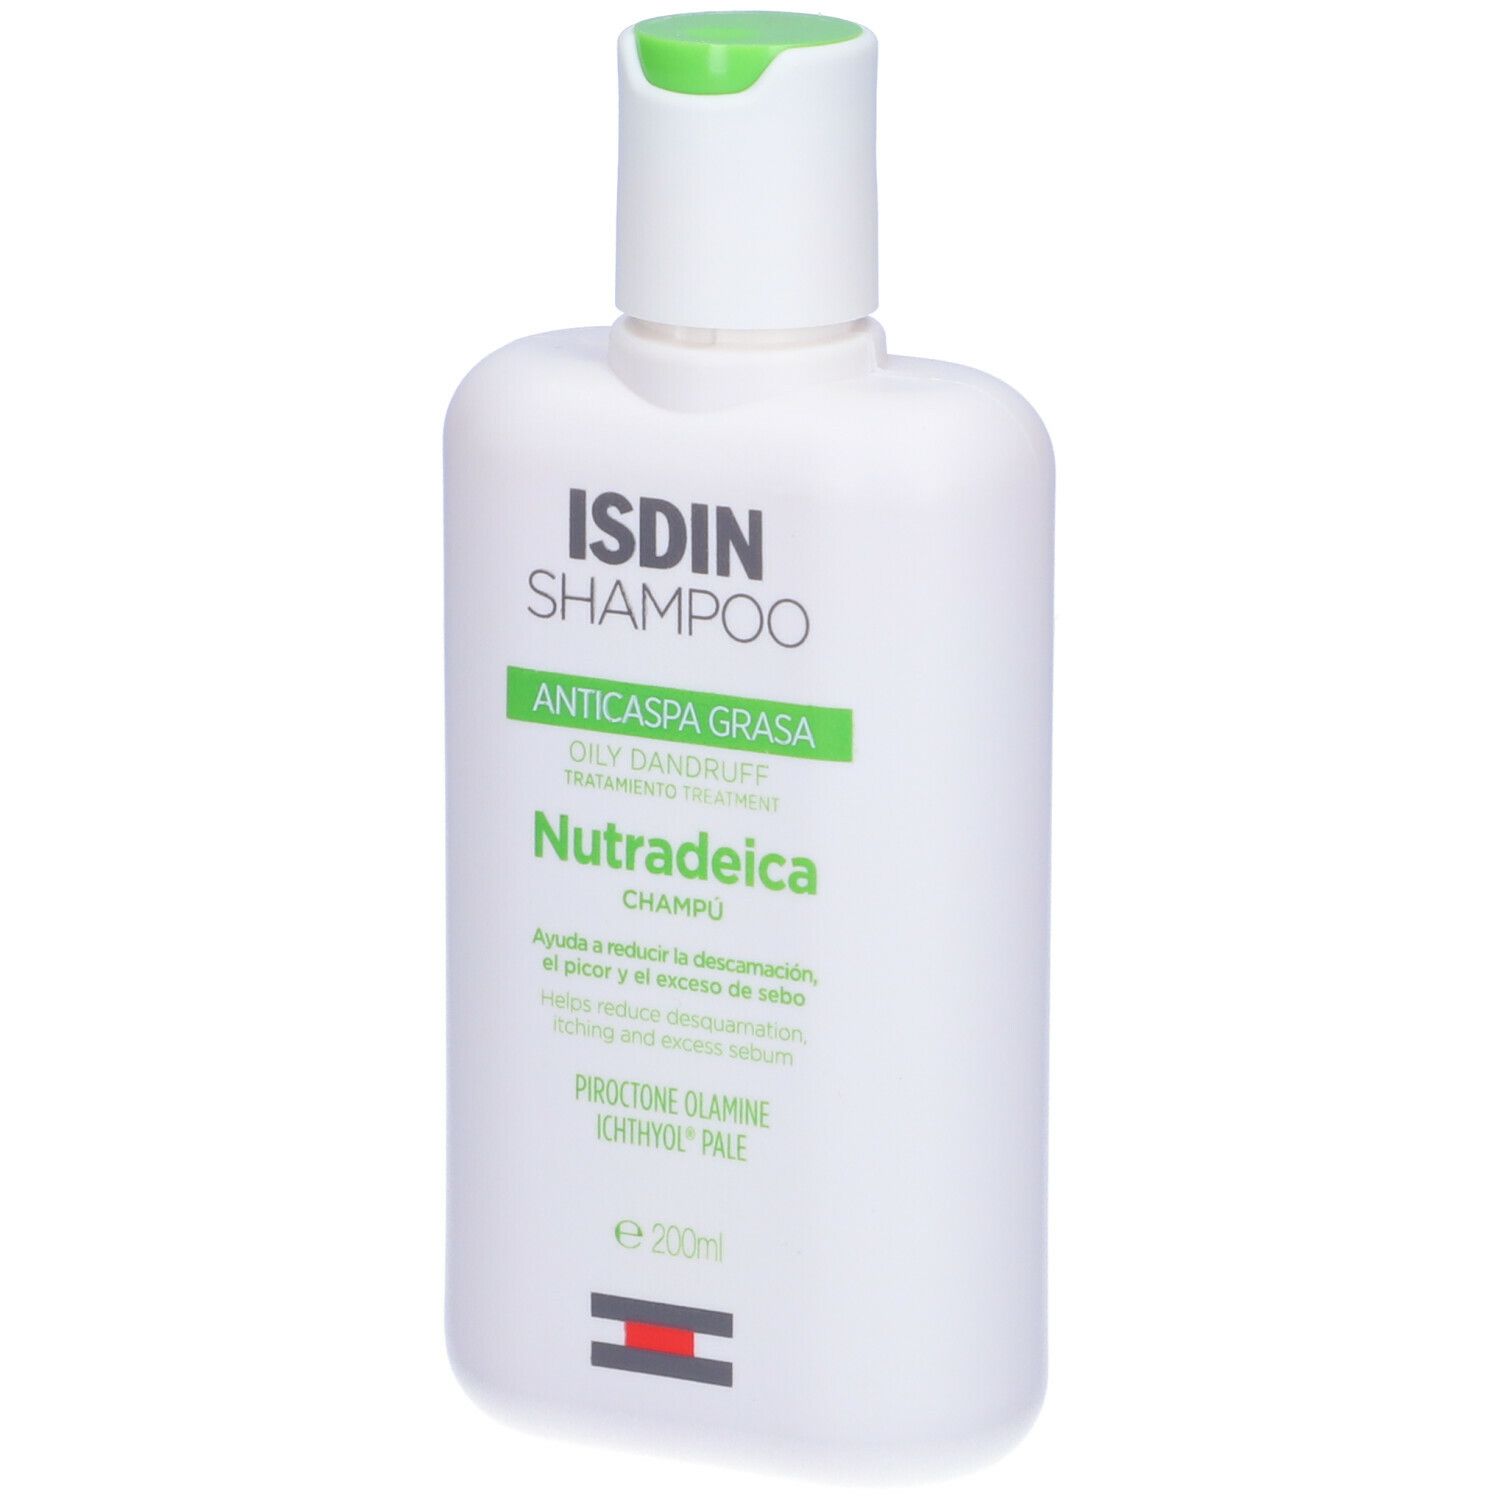 ISDIN Nutradeica Shampoo dermatologico antiforfora grassa